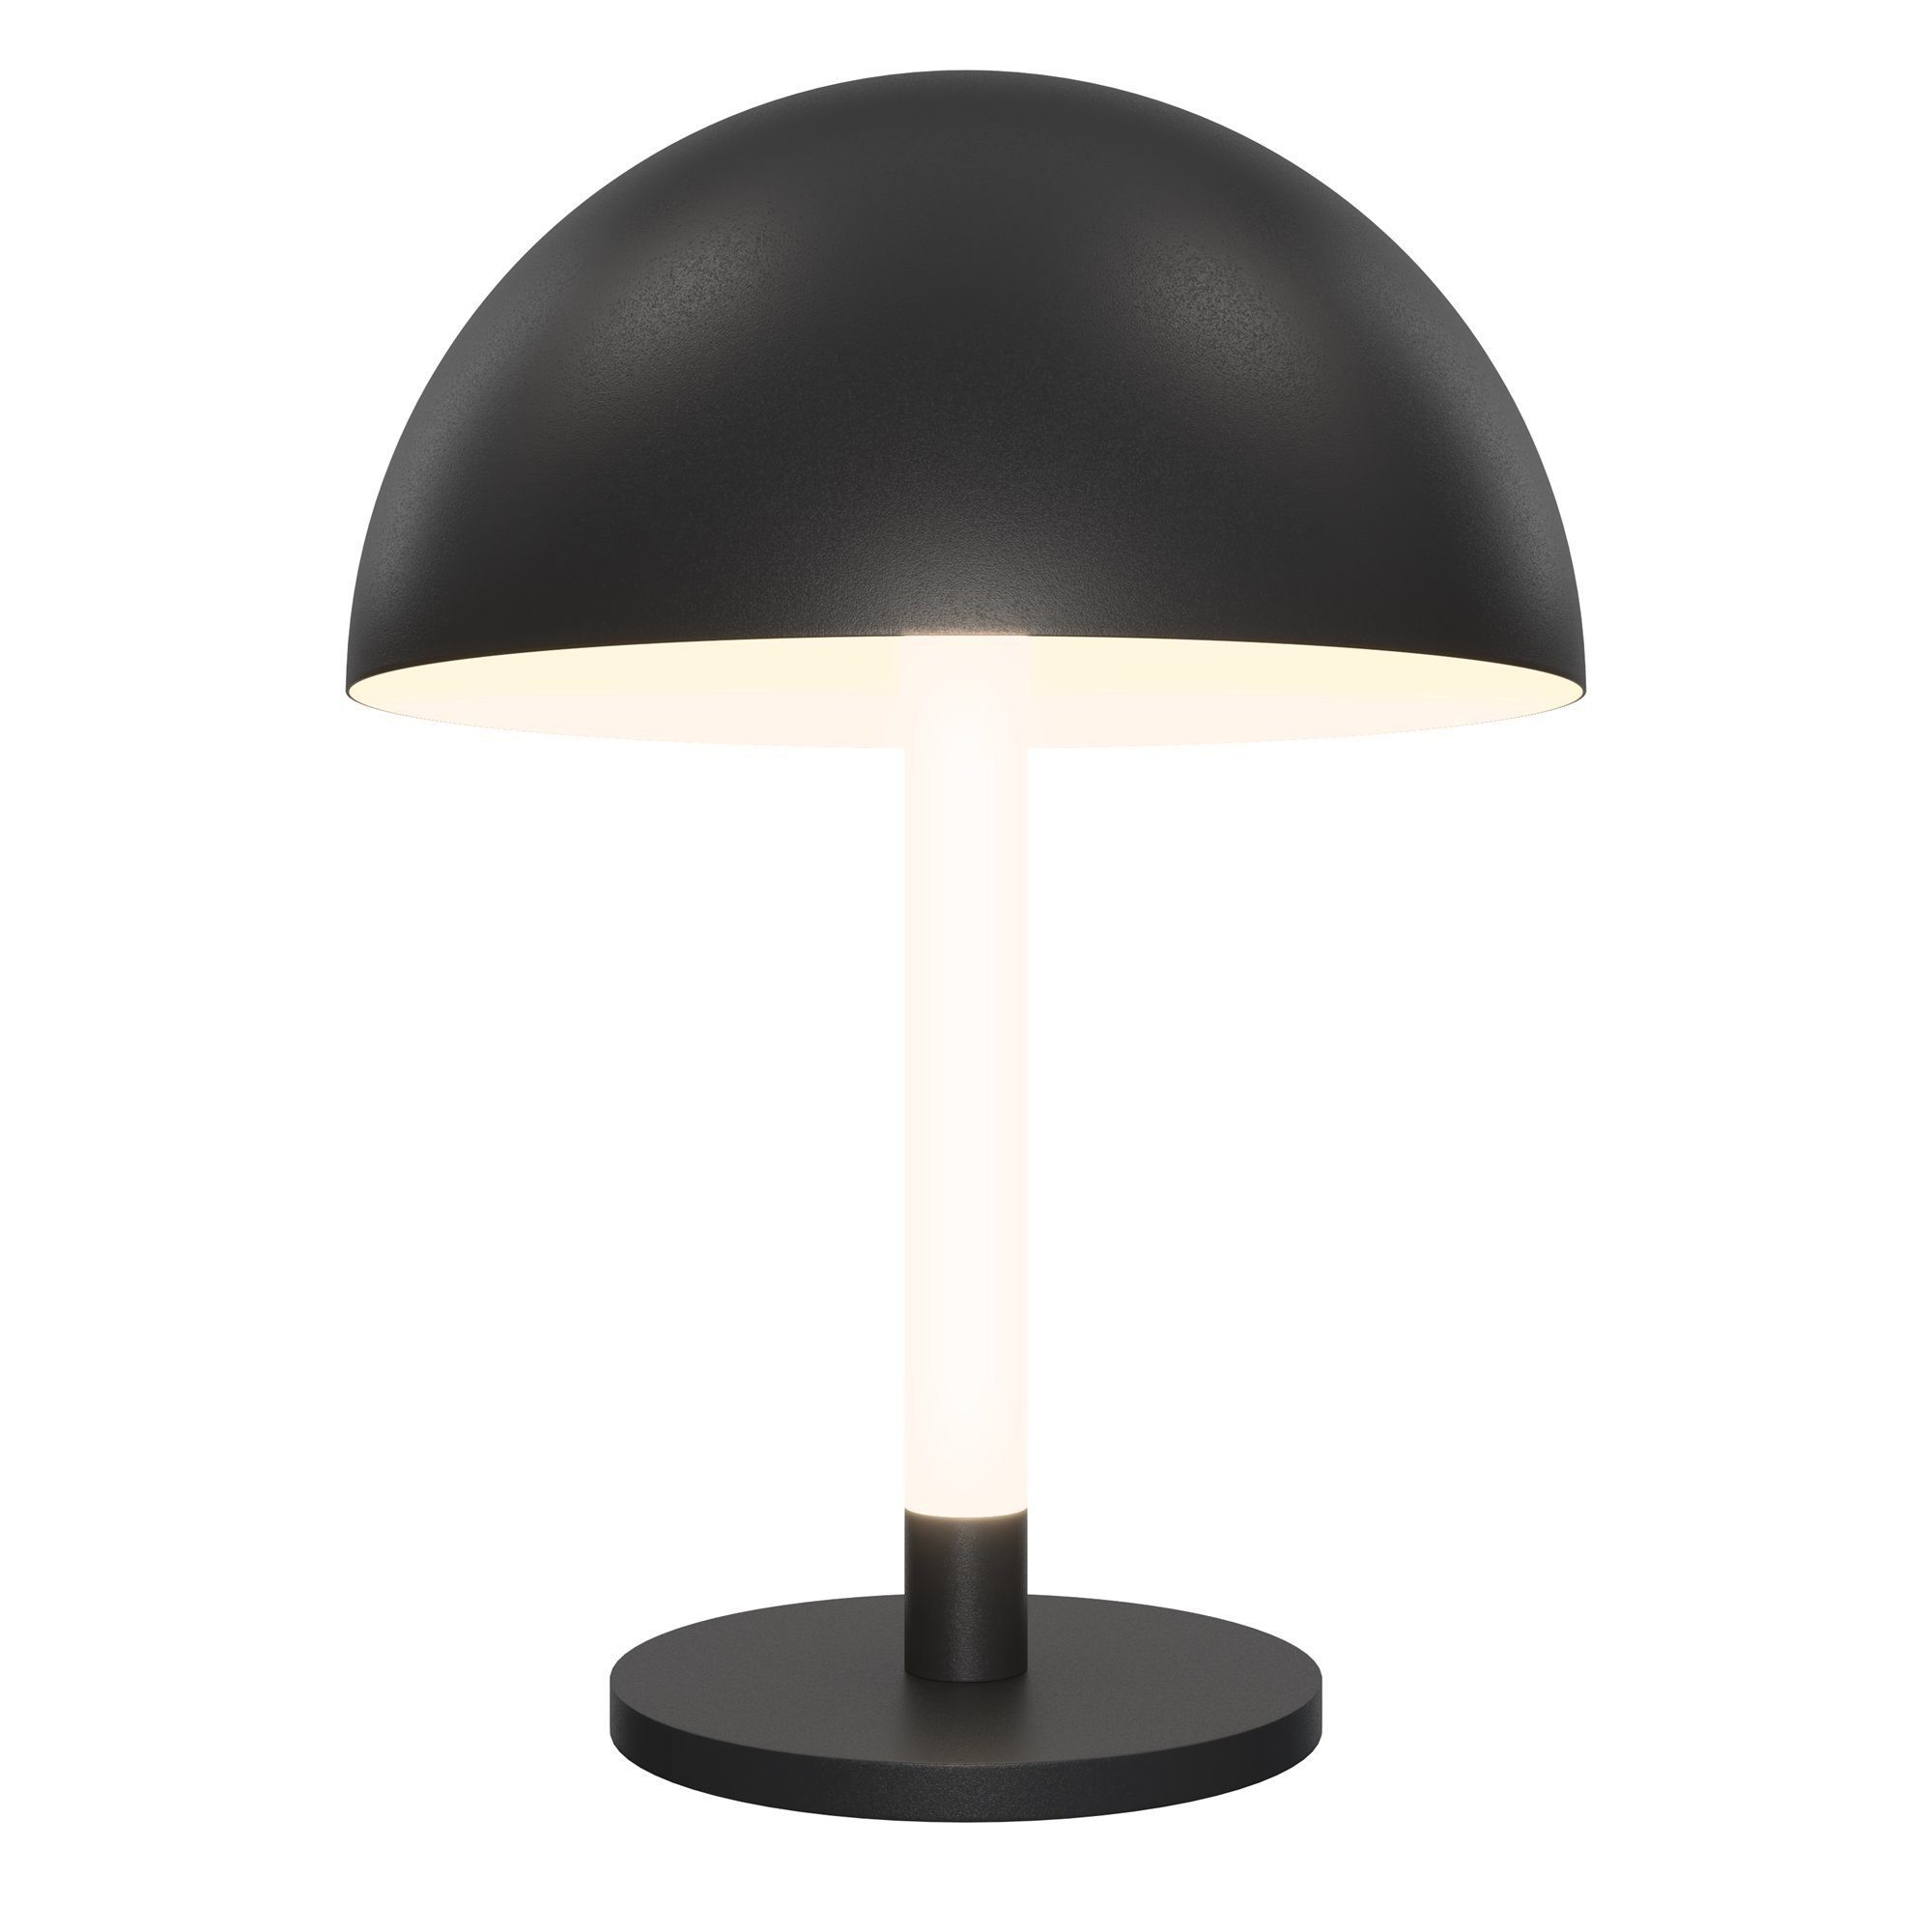 MAYTONI DECORATIVE LIGHTING Tischleuchte cm, Ray & fest dekoratives Design LED Raumobjekt Lampe 30x45x30 hochwertige integriert